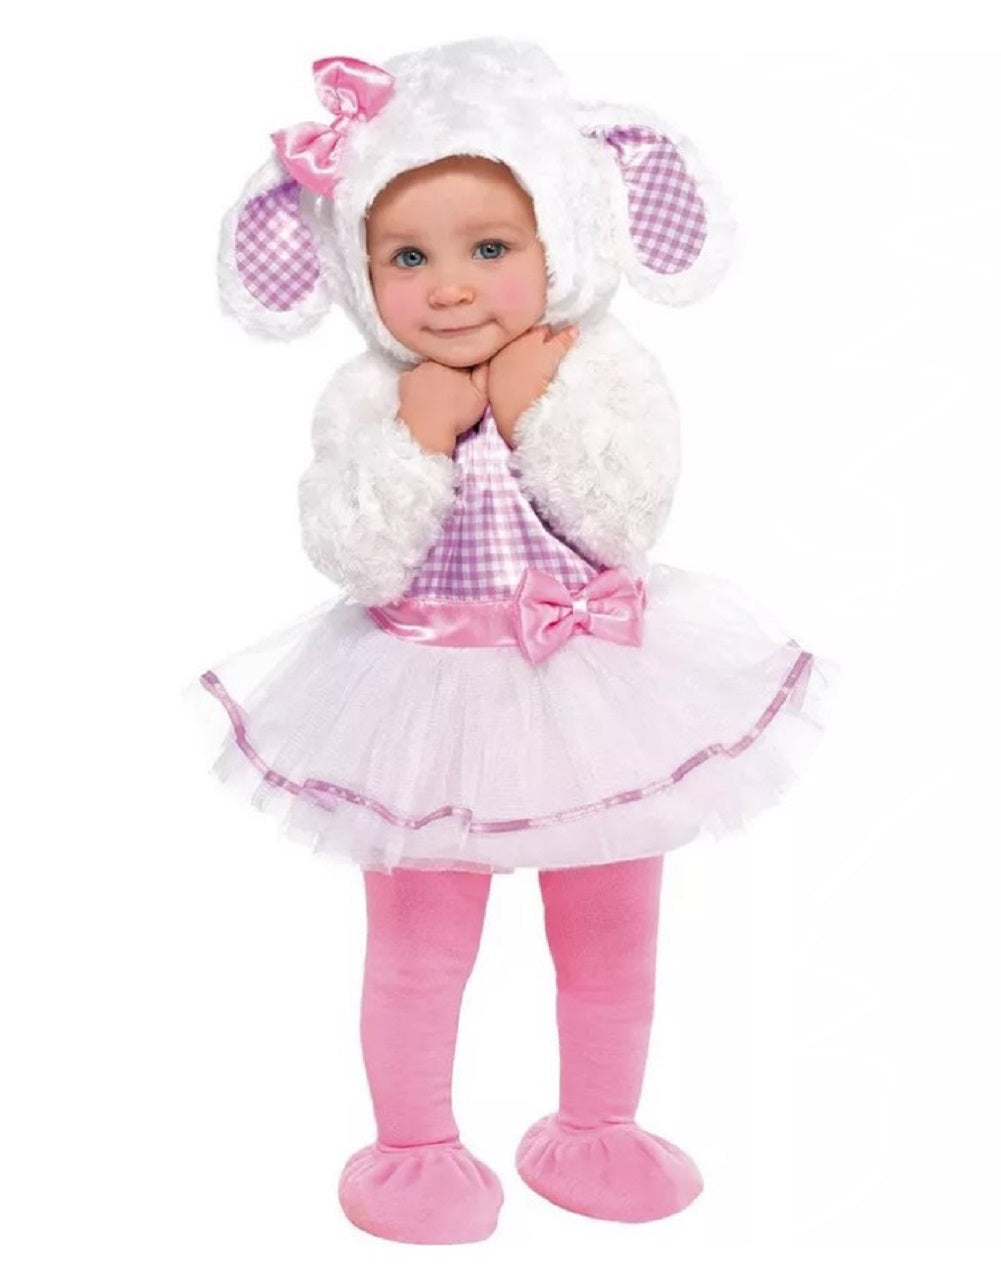 Lamb - Tutu - Pink Gingham - Easter - Costume - Infant - 18-24 Months